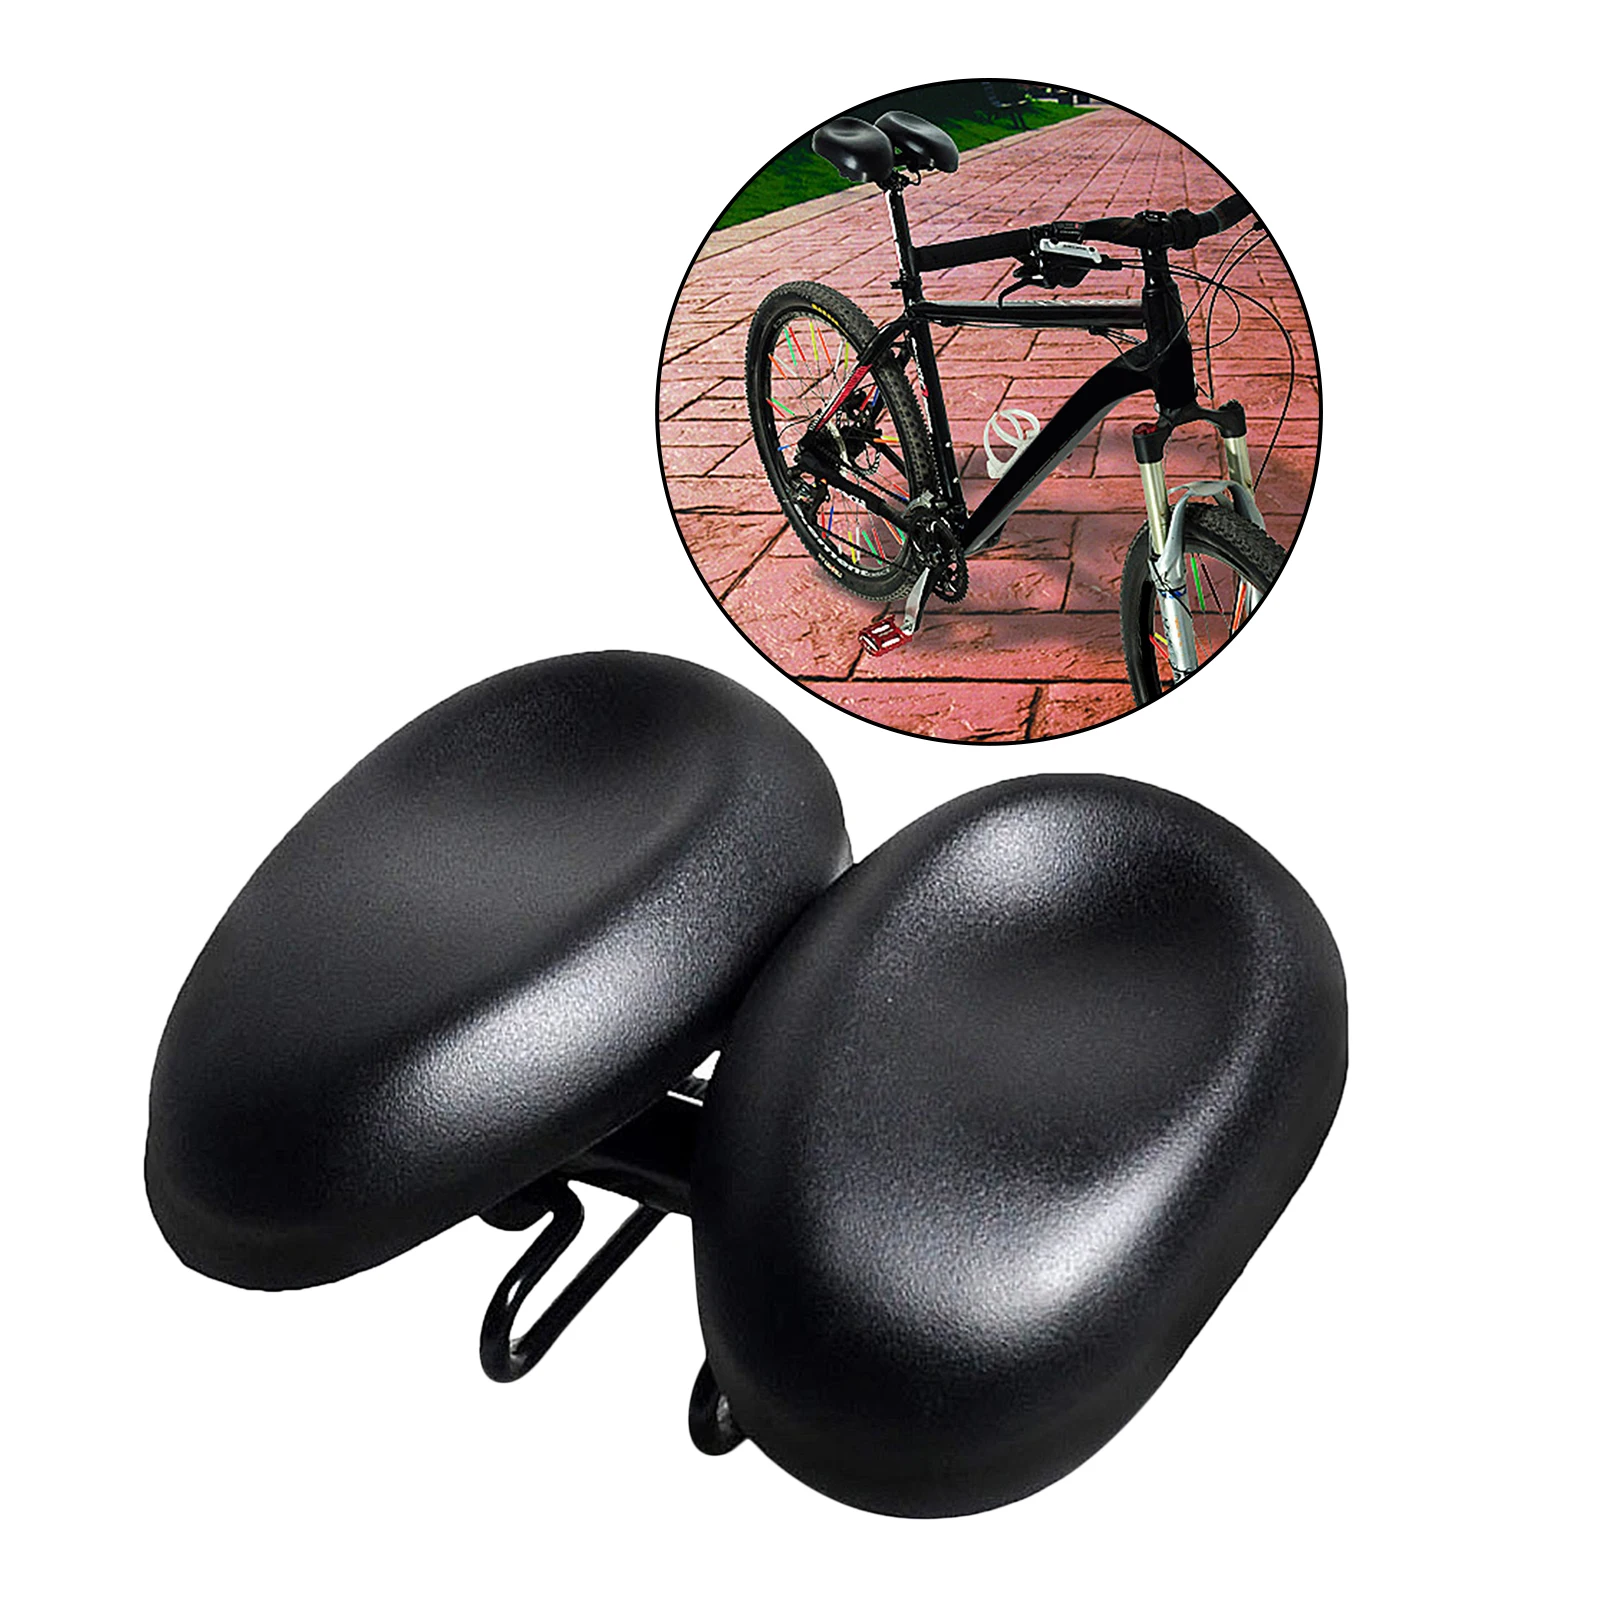 Bicycle Seat Breathable Noseless Adjustable Bike Saddles Padded Ergonomic Dual Pad Bicycle Saddle Bicycle Bike Accessories